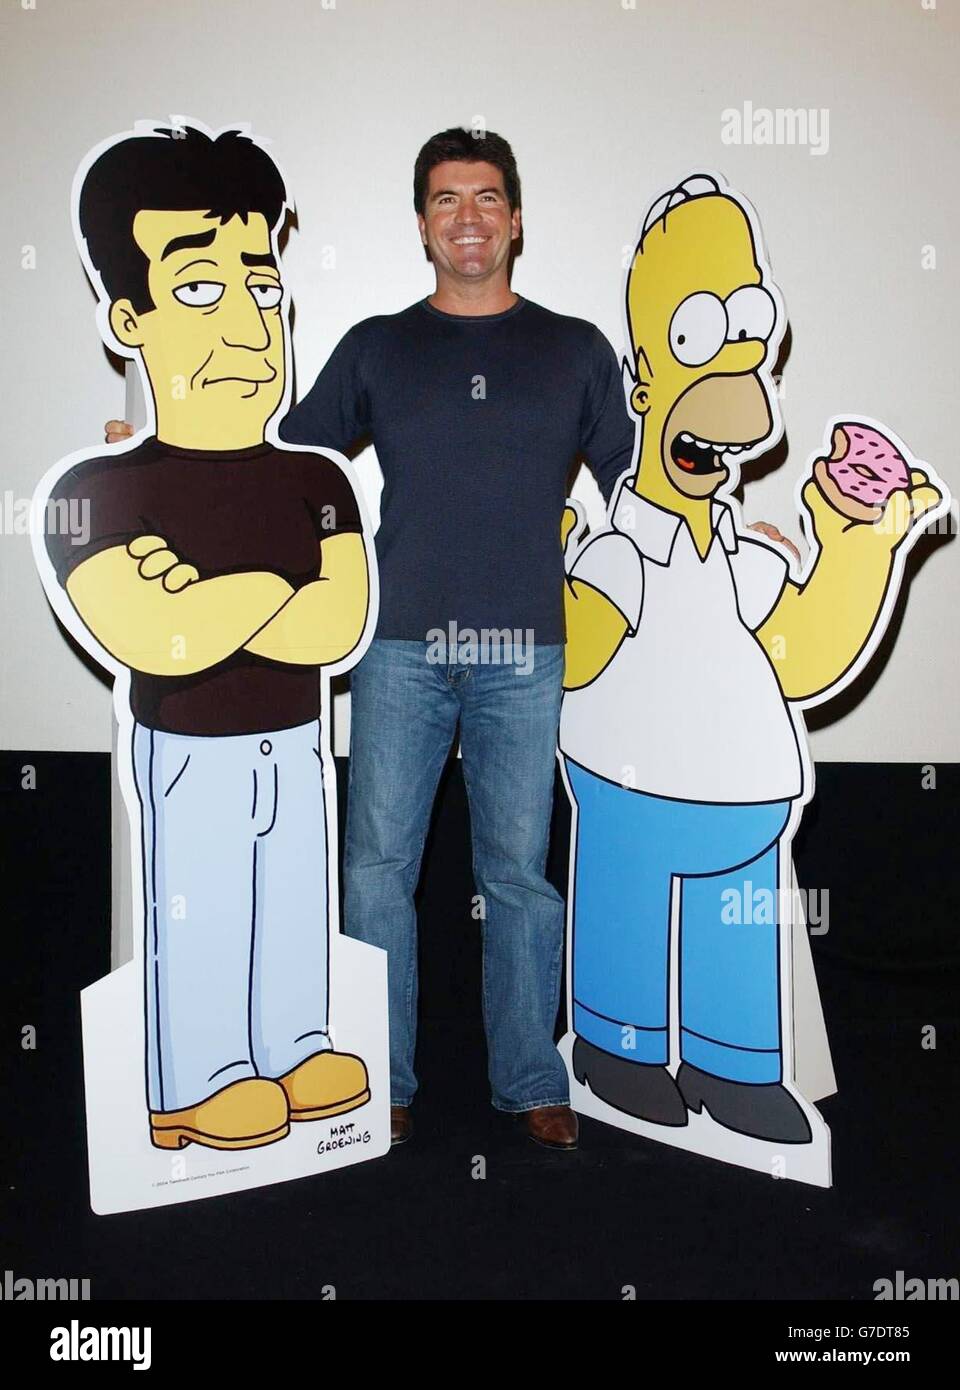 Simon Cowell - The Simpsons Stock Photo